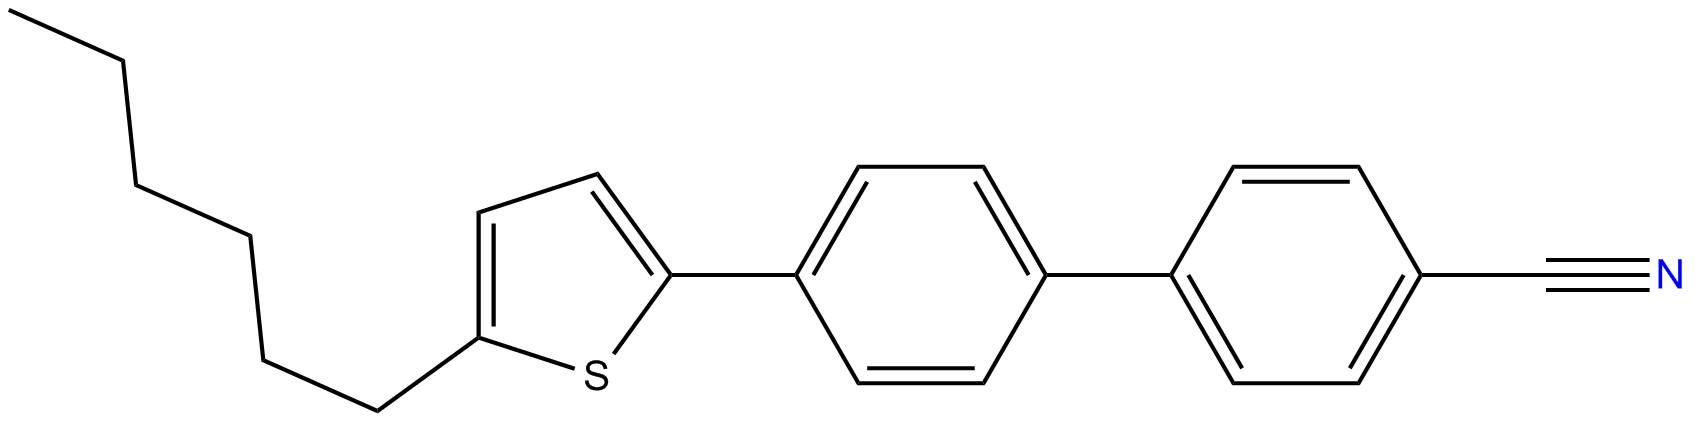 Image of 2-n-hexyl-5-(4'-cyanobiphenyl-4-yl)thiophene